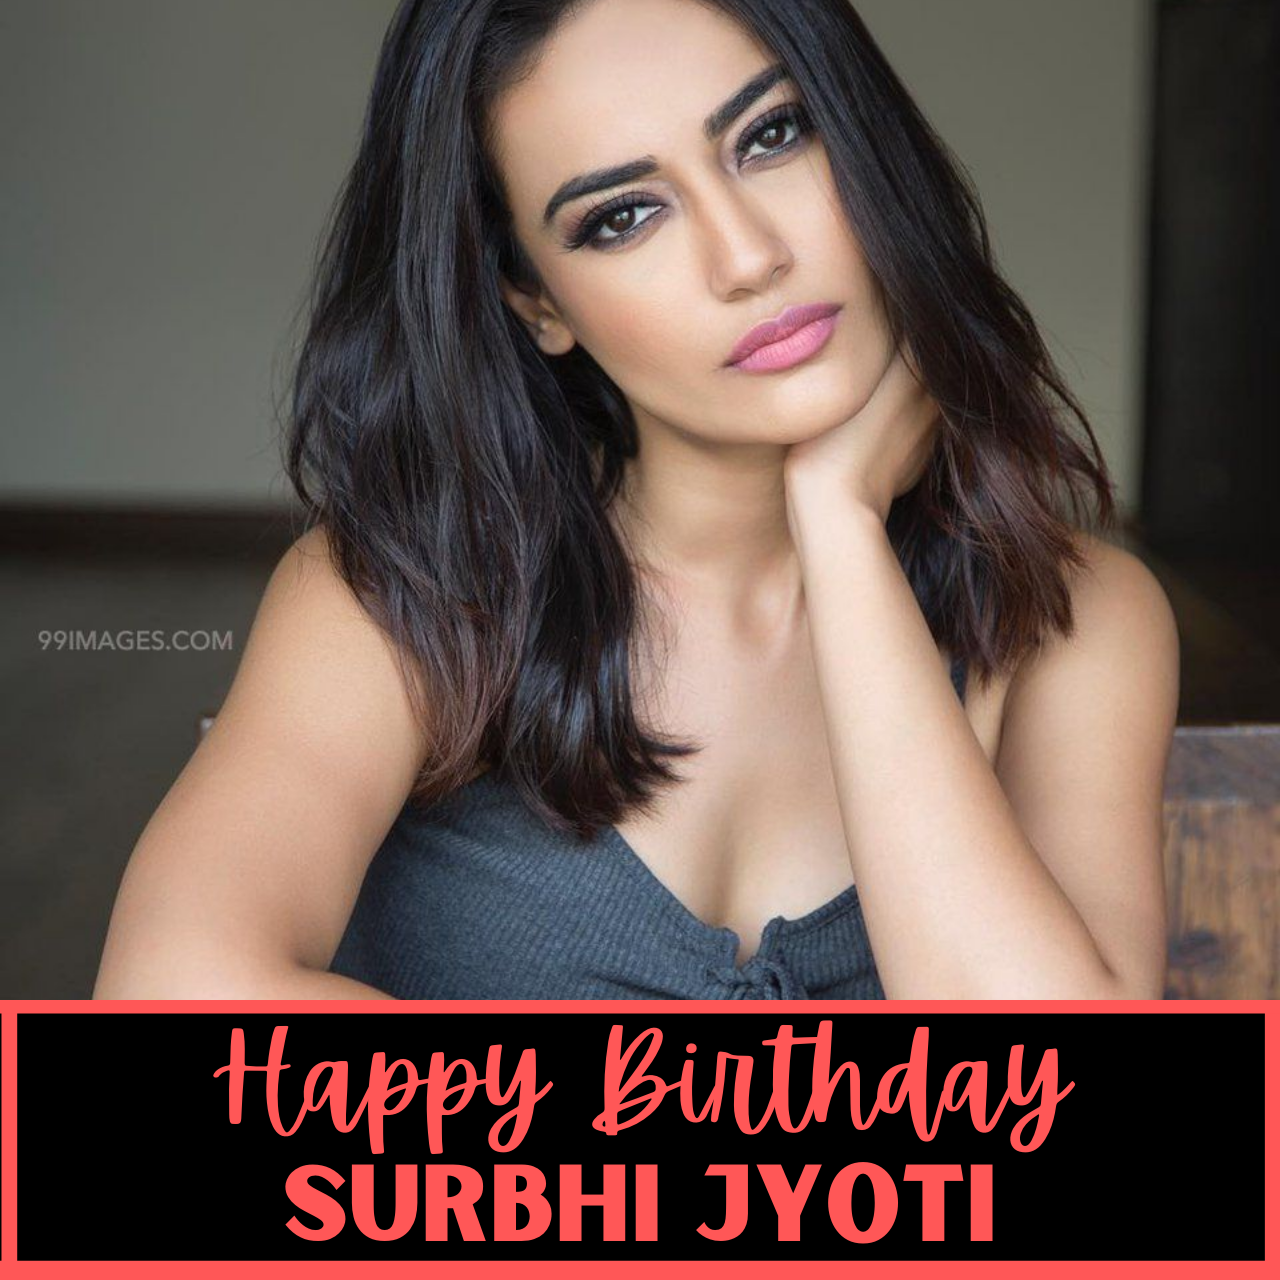 Happy Birthday Surbhi Jyoti: Photos (pic), Wishes, and WhatsApp Status Video